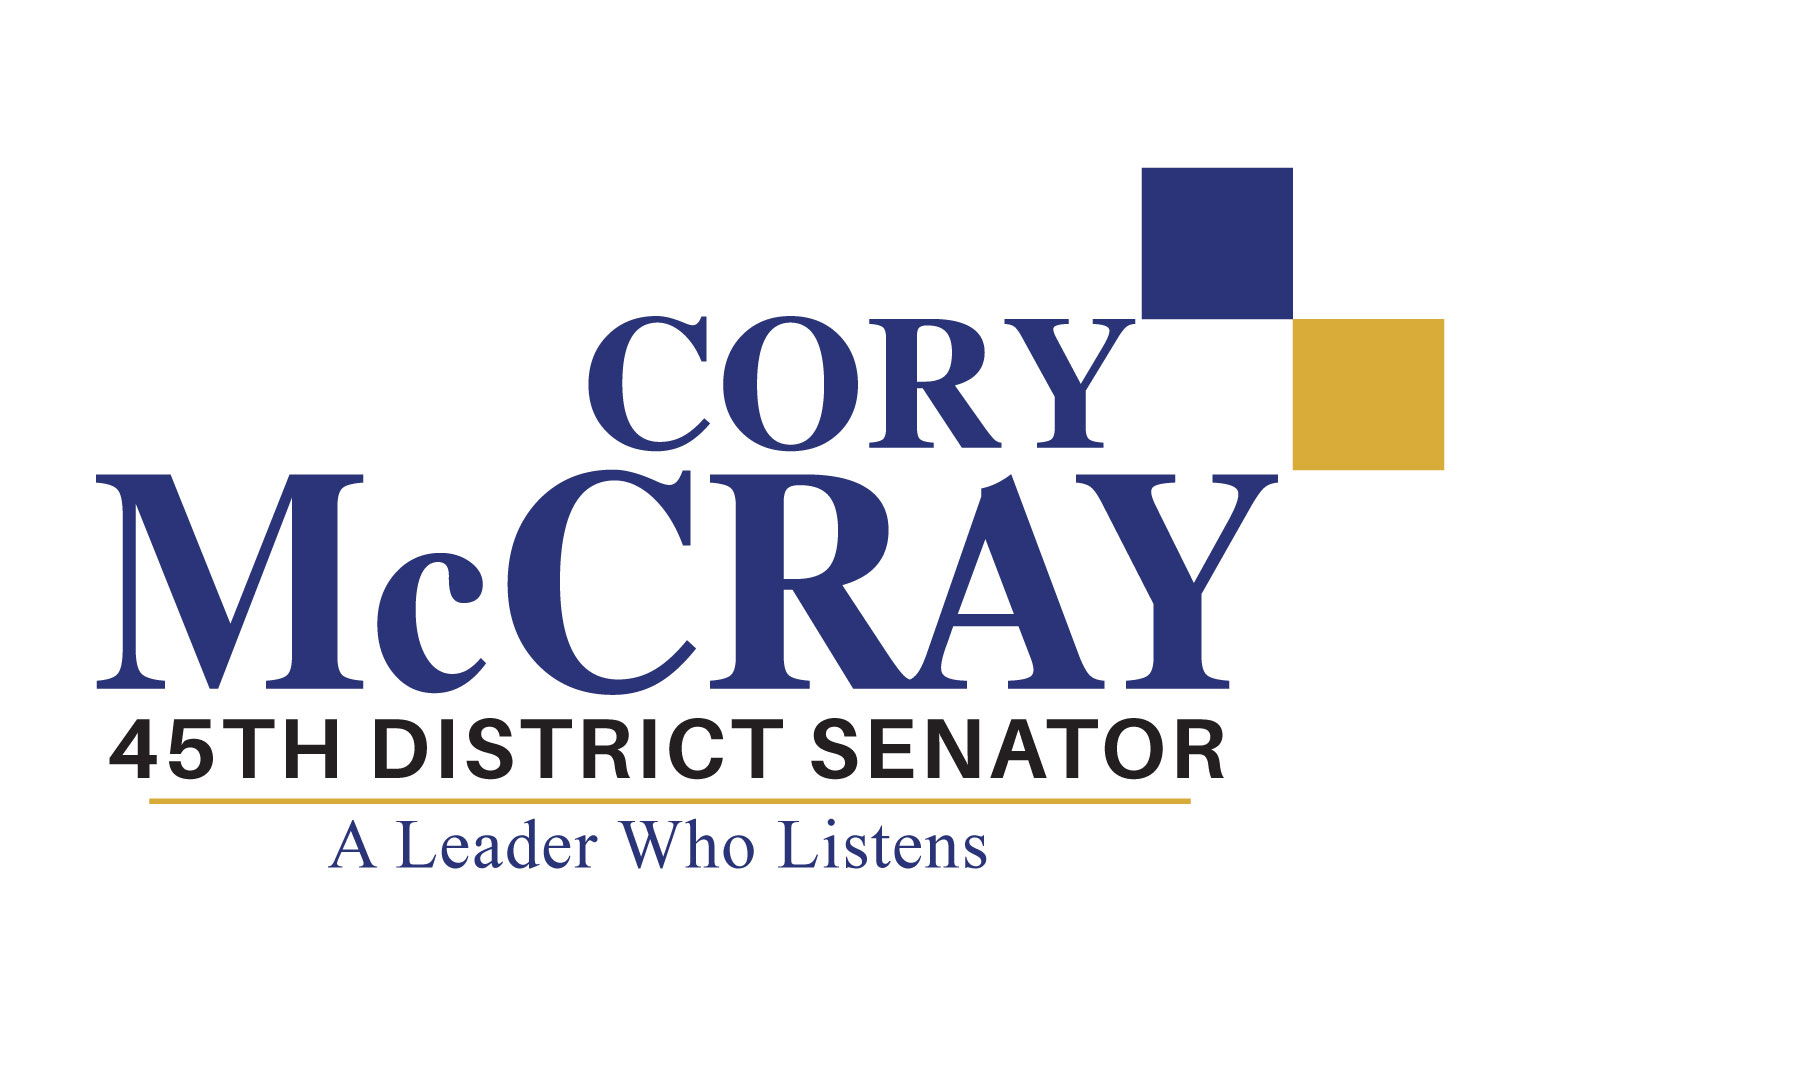 Friends of Senator Cory McCray